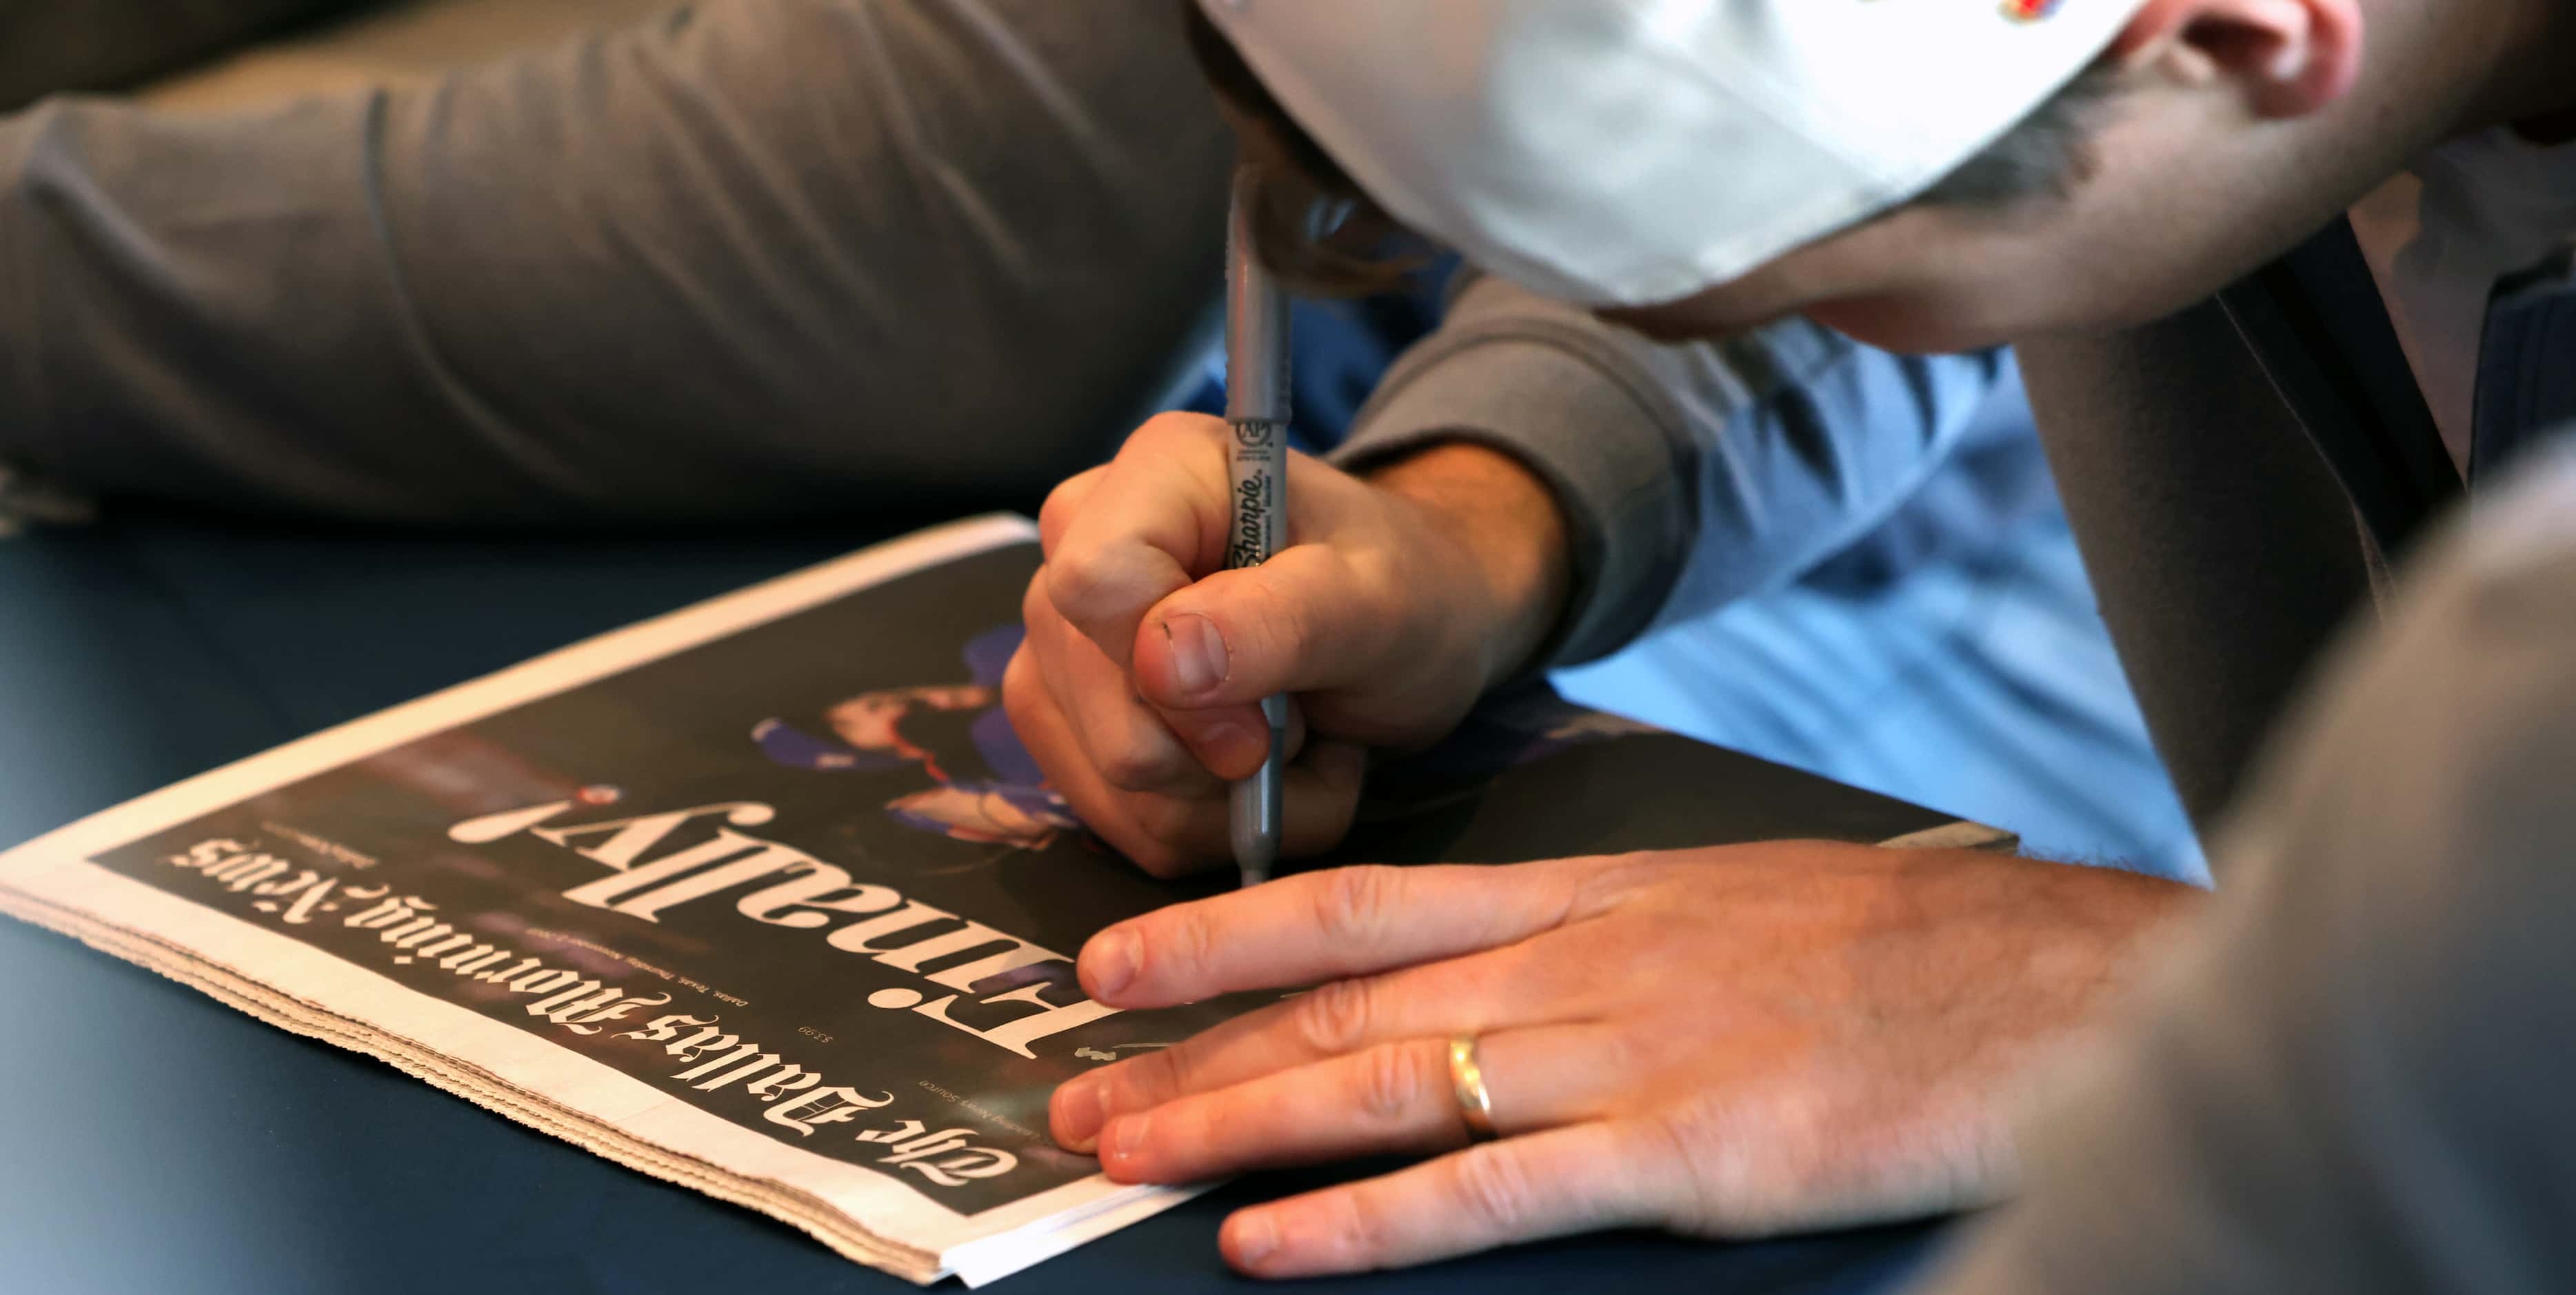 Texas Rangers pitcher Josh Sborz autographs a souvenir cover of a special newspaper section...